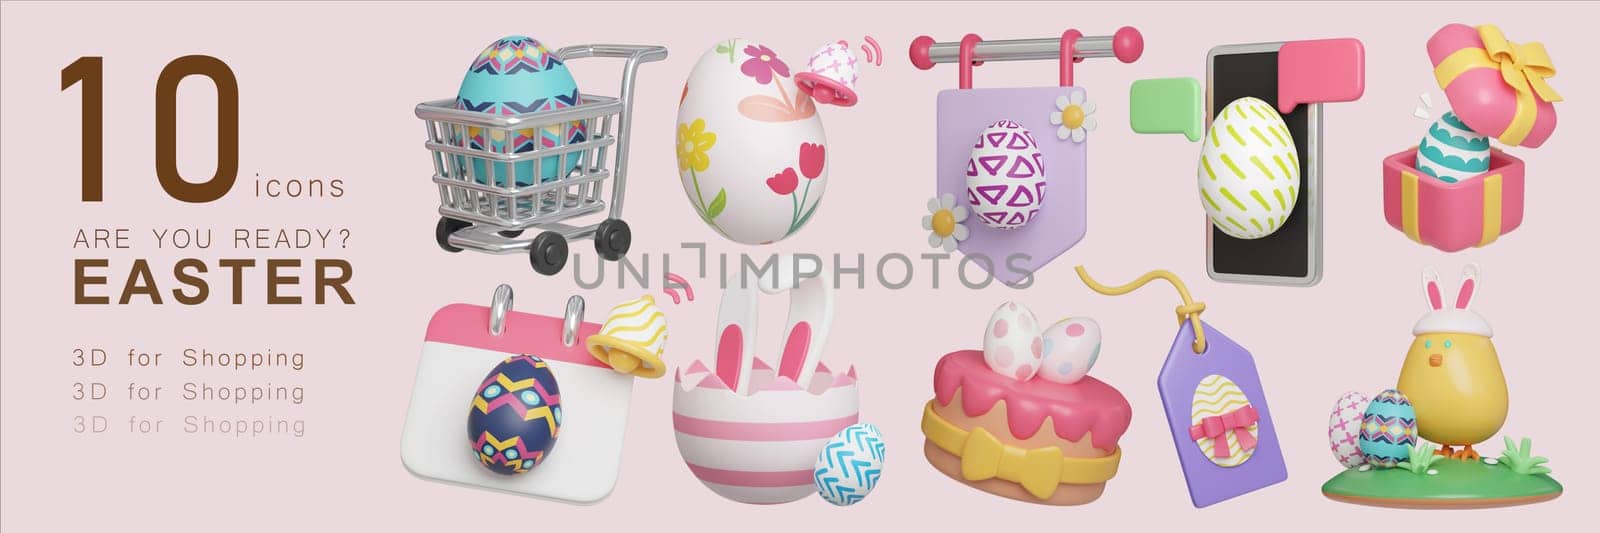 3D illustrated cute festive set of shopping Easter Egg icons. cart, egg, sign, gift, calendar, rabbit, cake, tags, chick, 3D Illustration Easter festive. by meepiangraphic